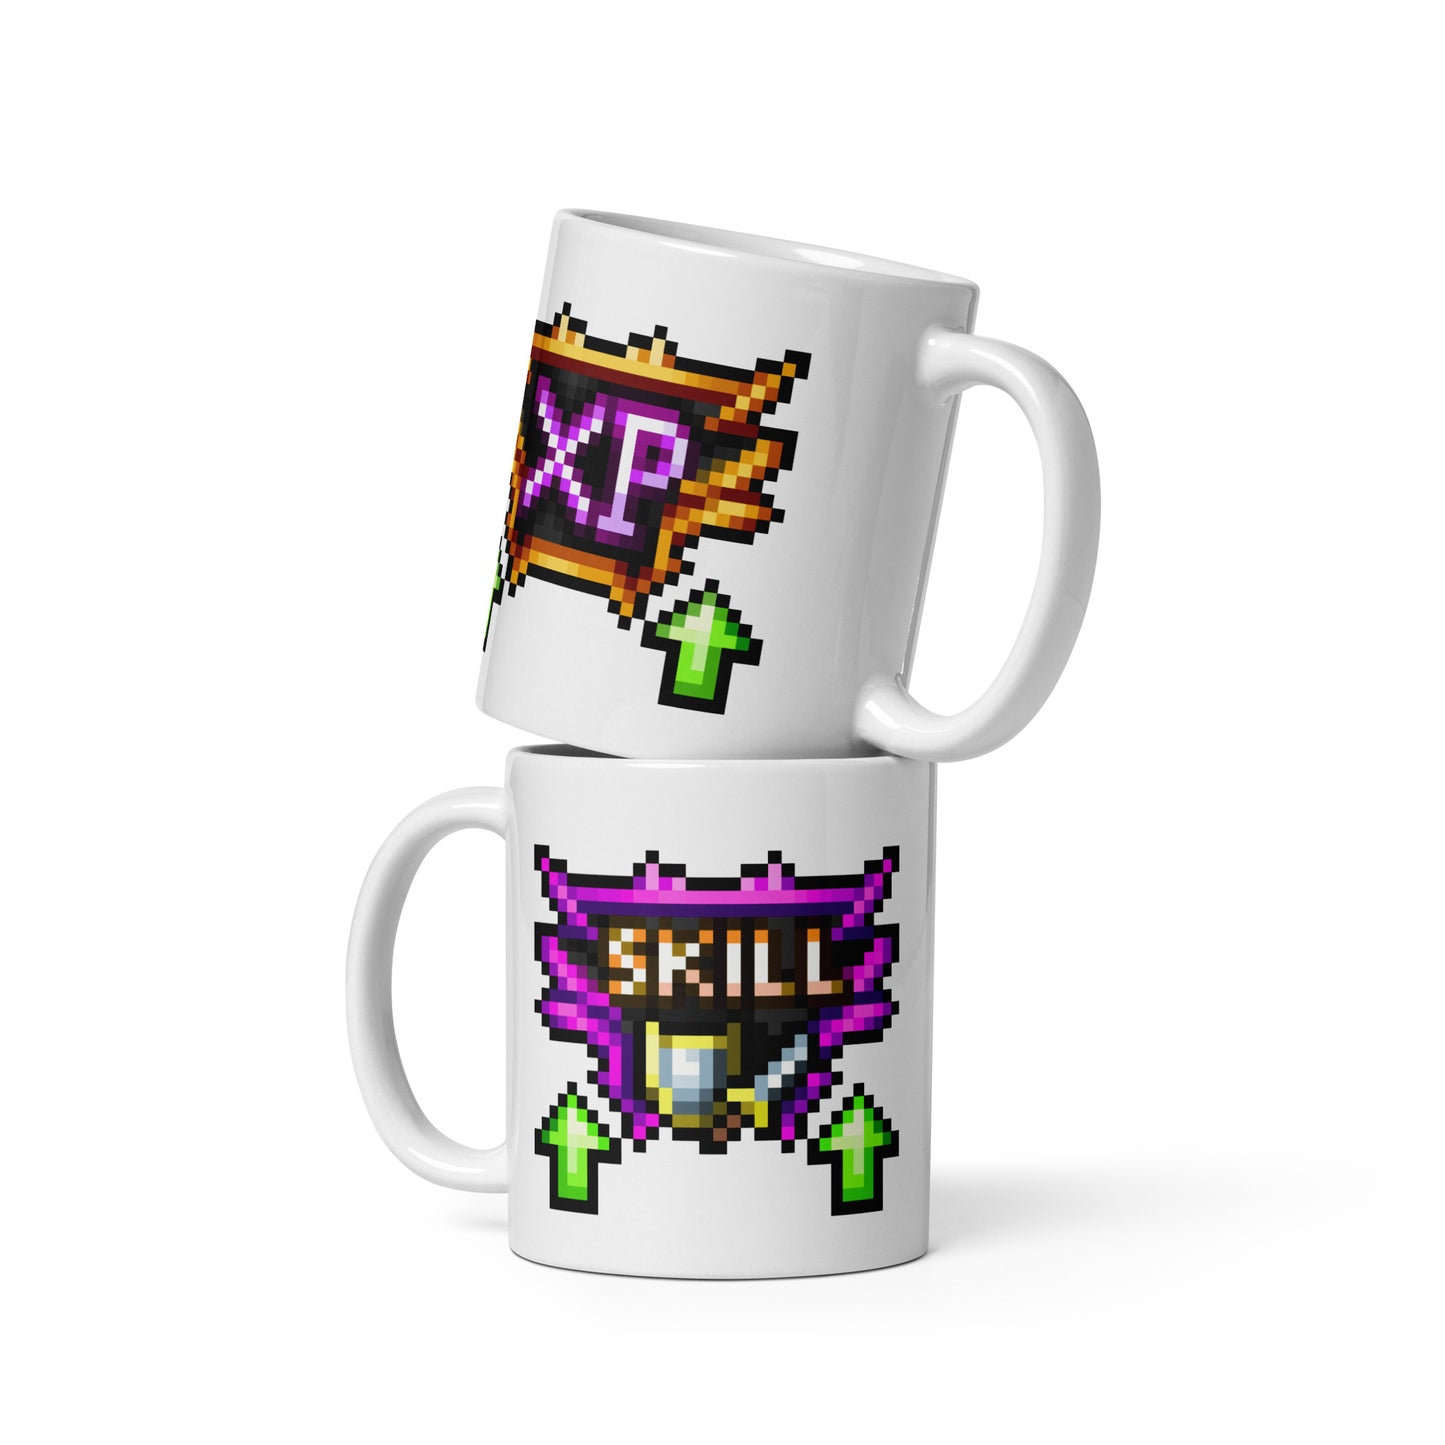 EXP & Skill Boost Mug